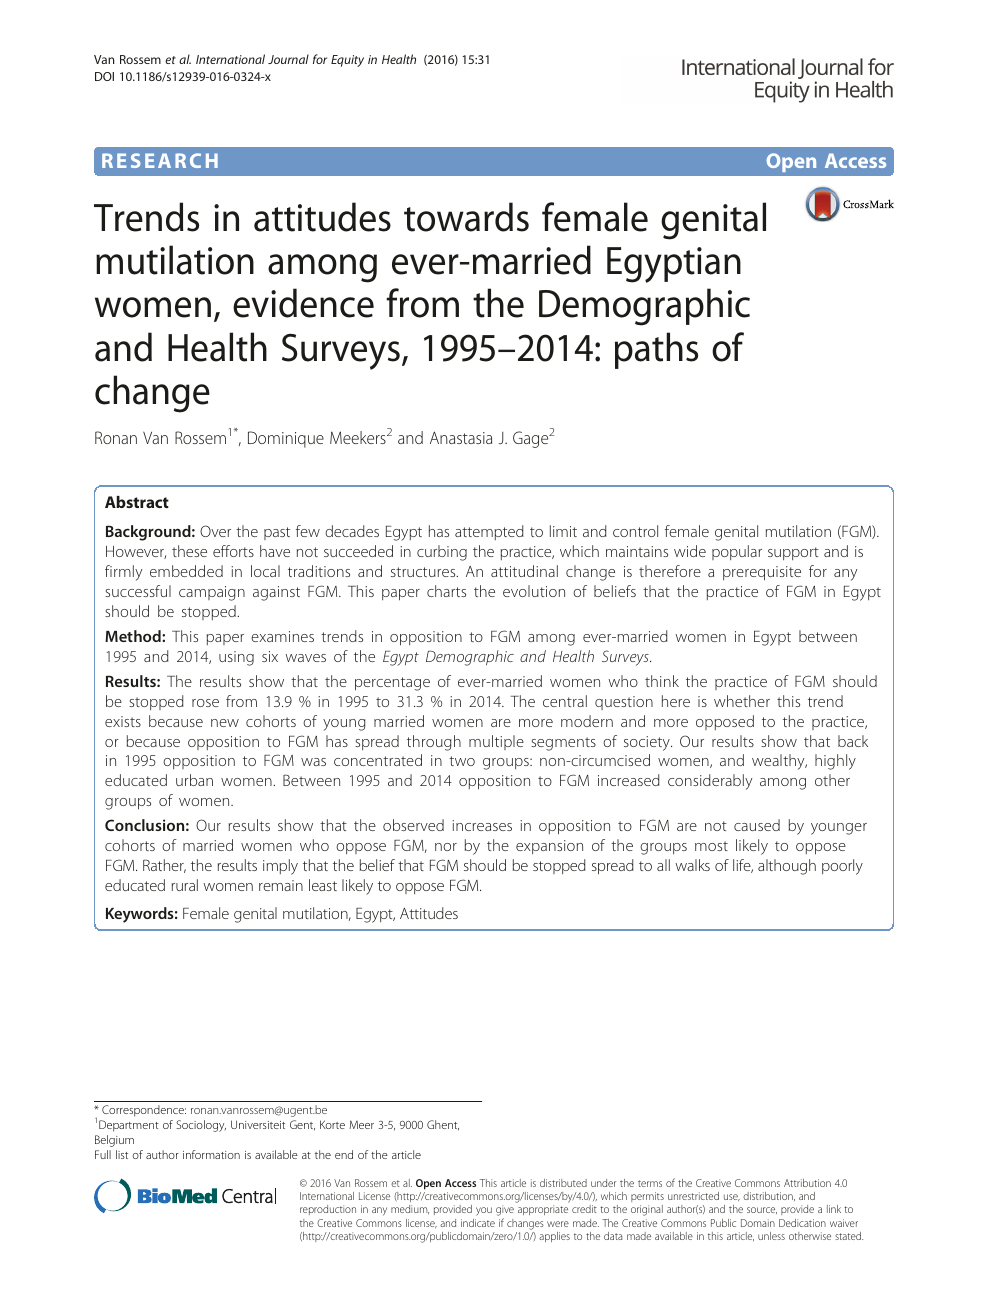 female circumcision research paper